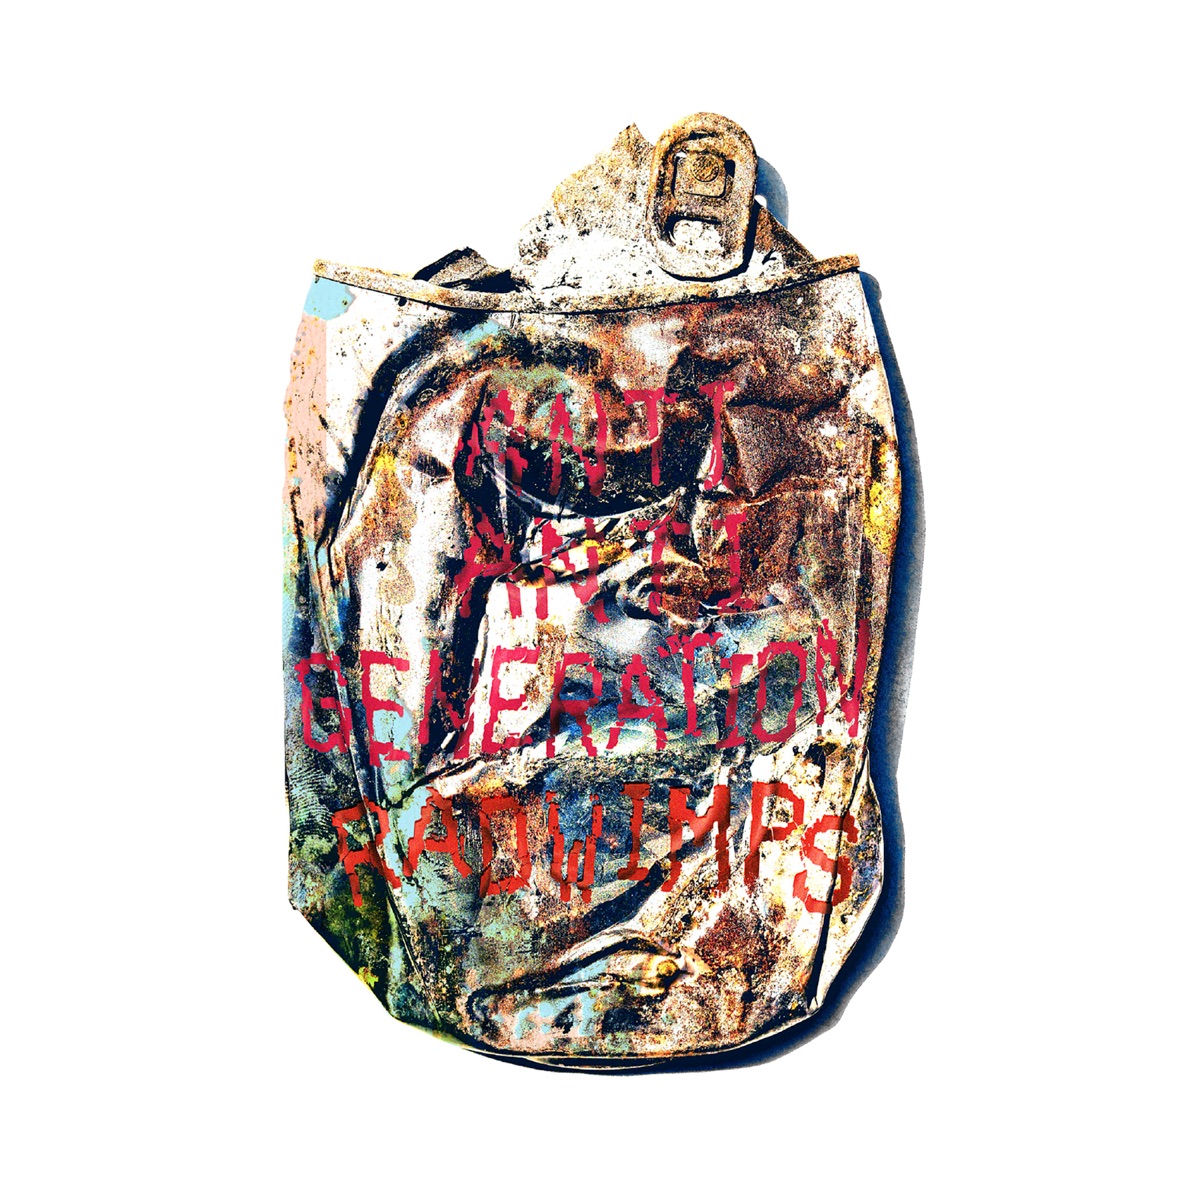 Cover art for『RADWIMPS - Sokkenai』from the release『ANTI ANTI GENERATION』